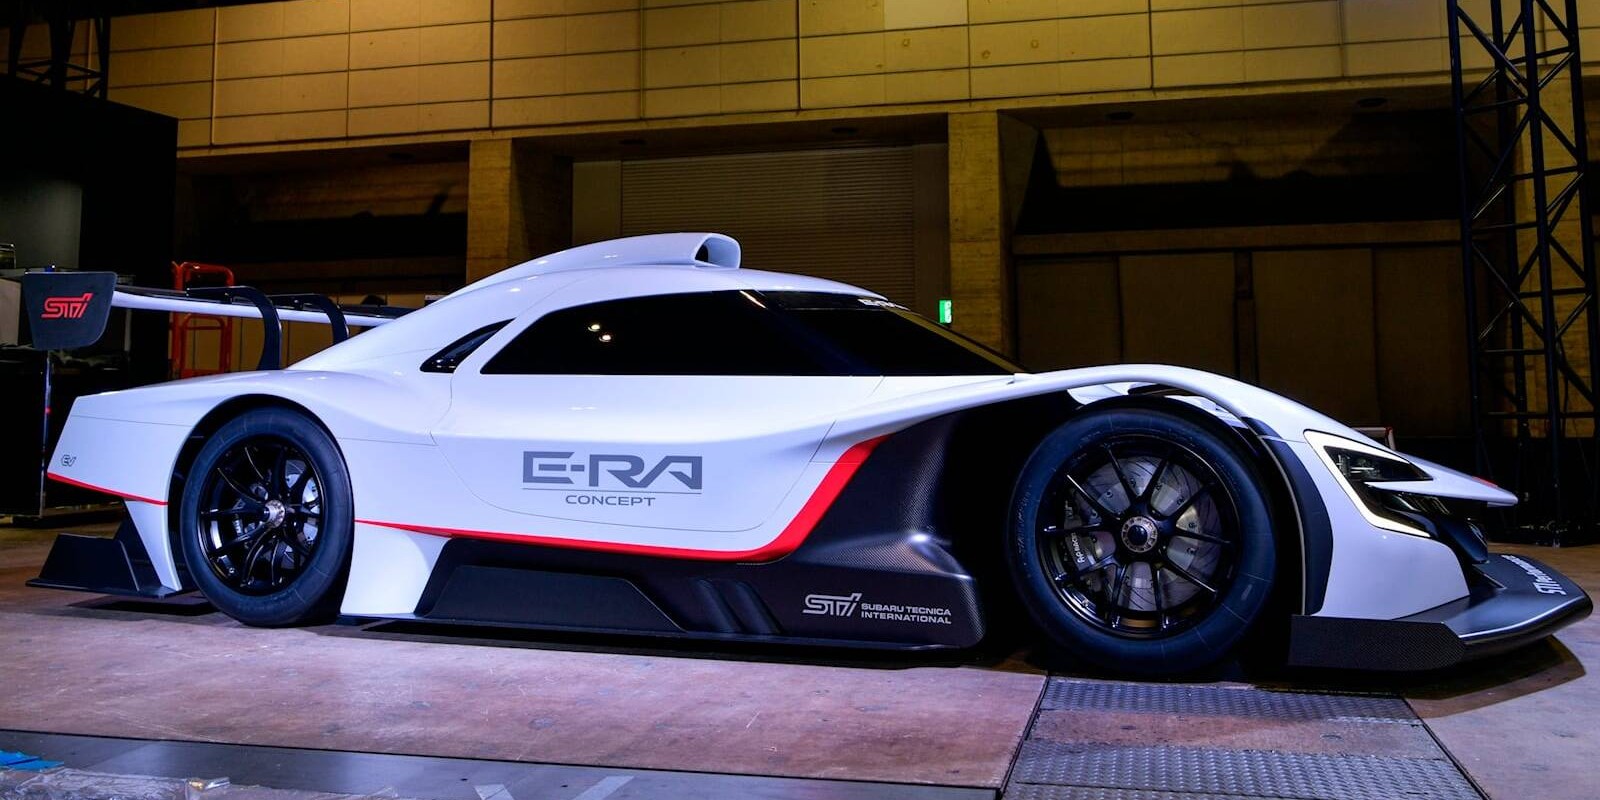 Subaru reveals 1,073 hp STI E-RA electric track car at Tokyo Auto